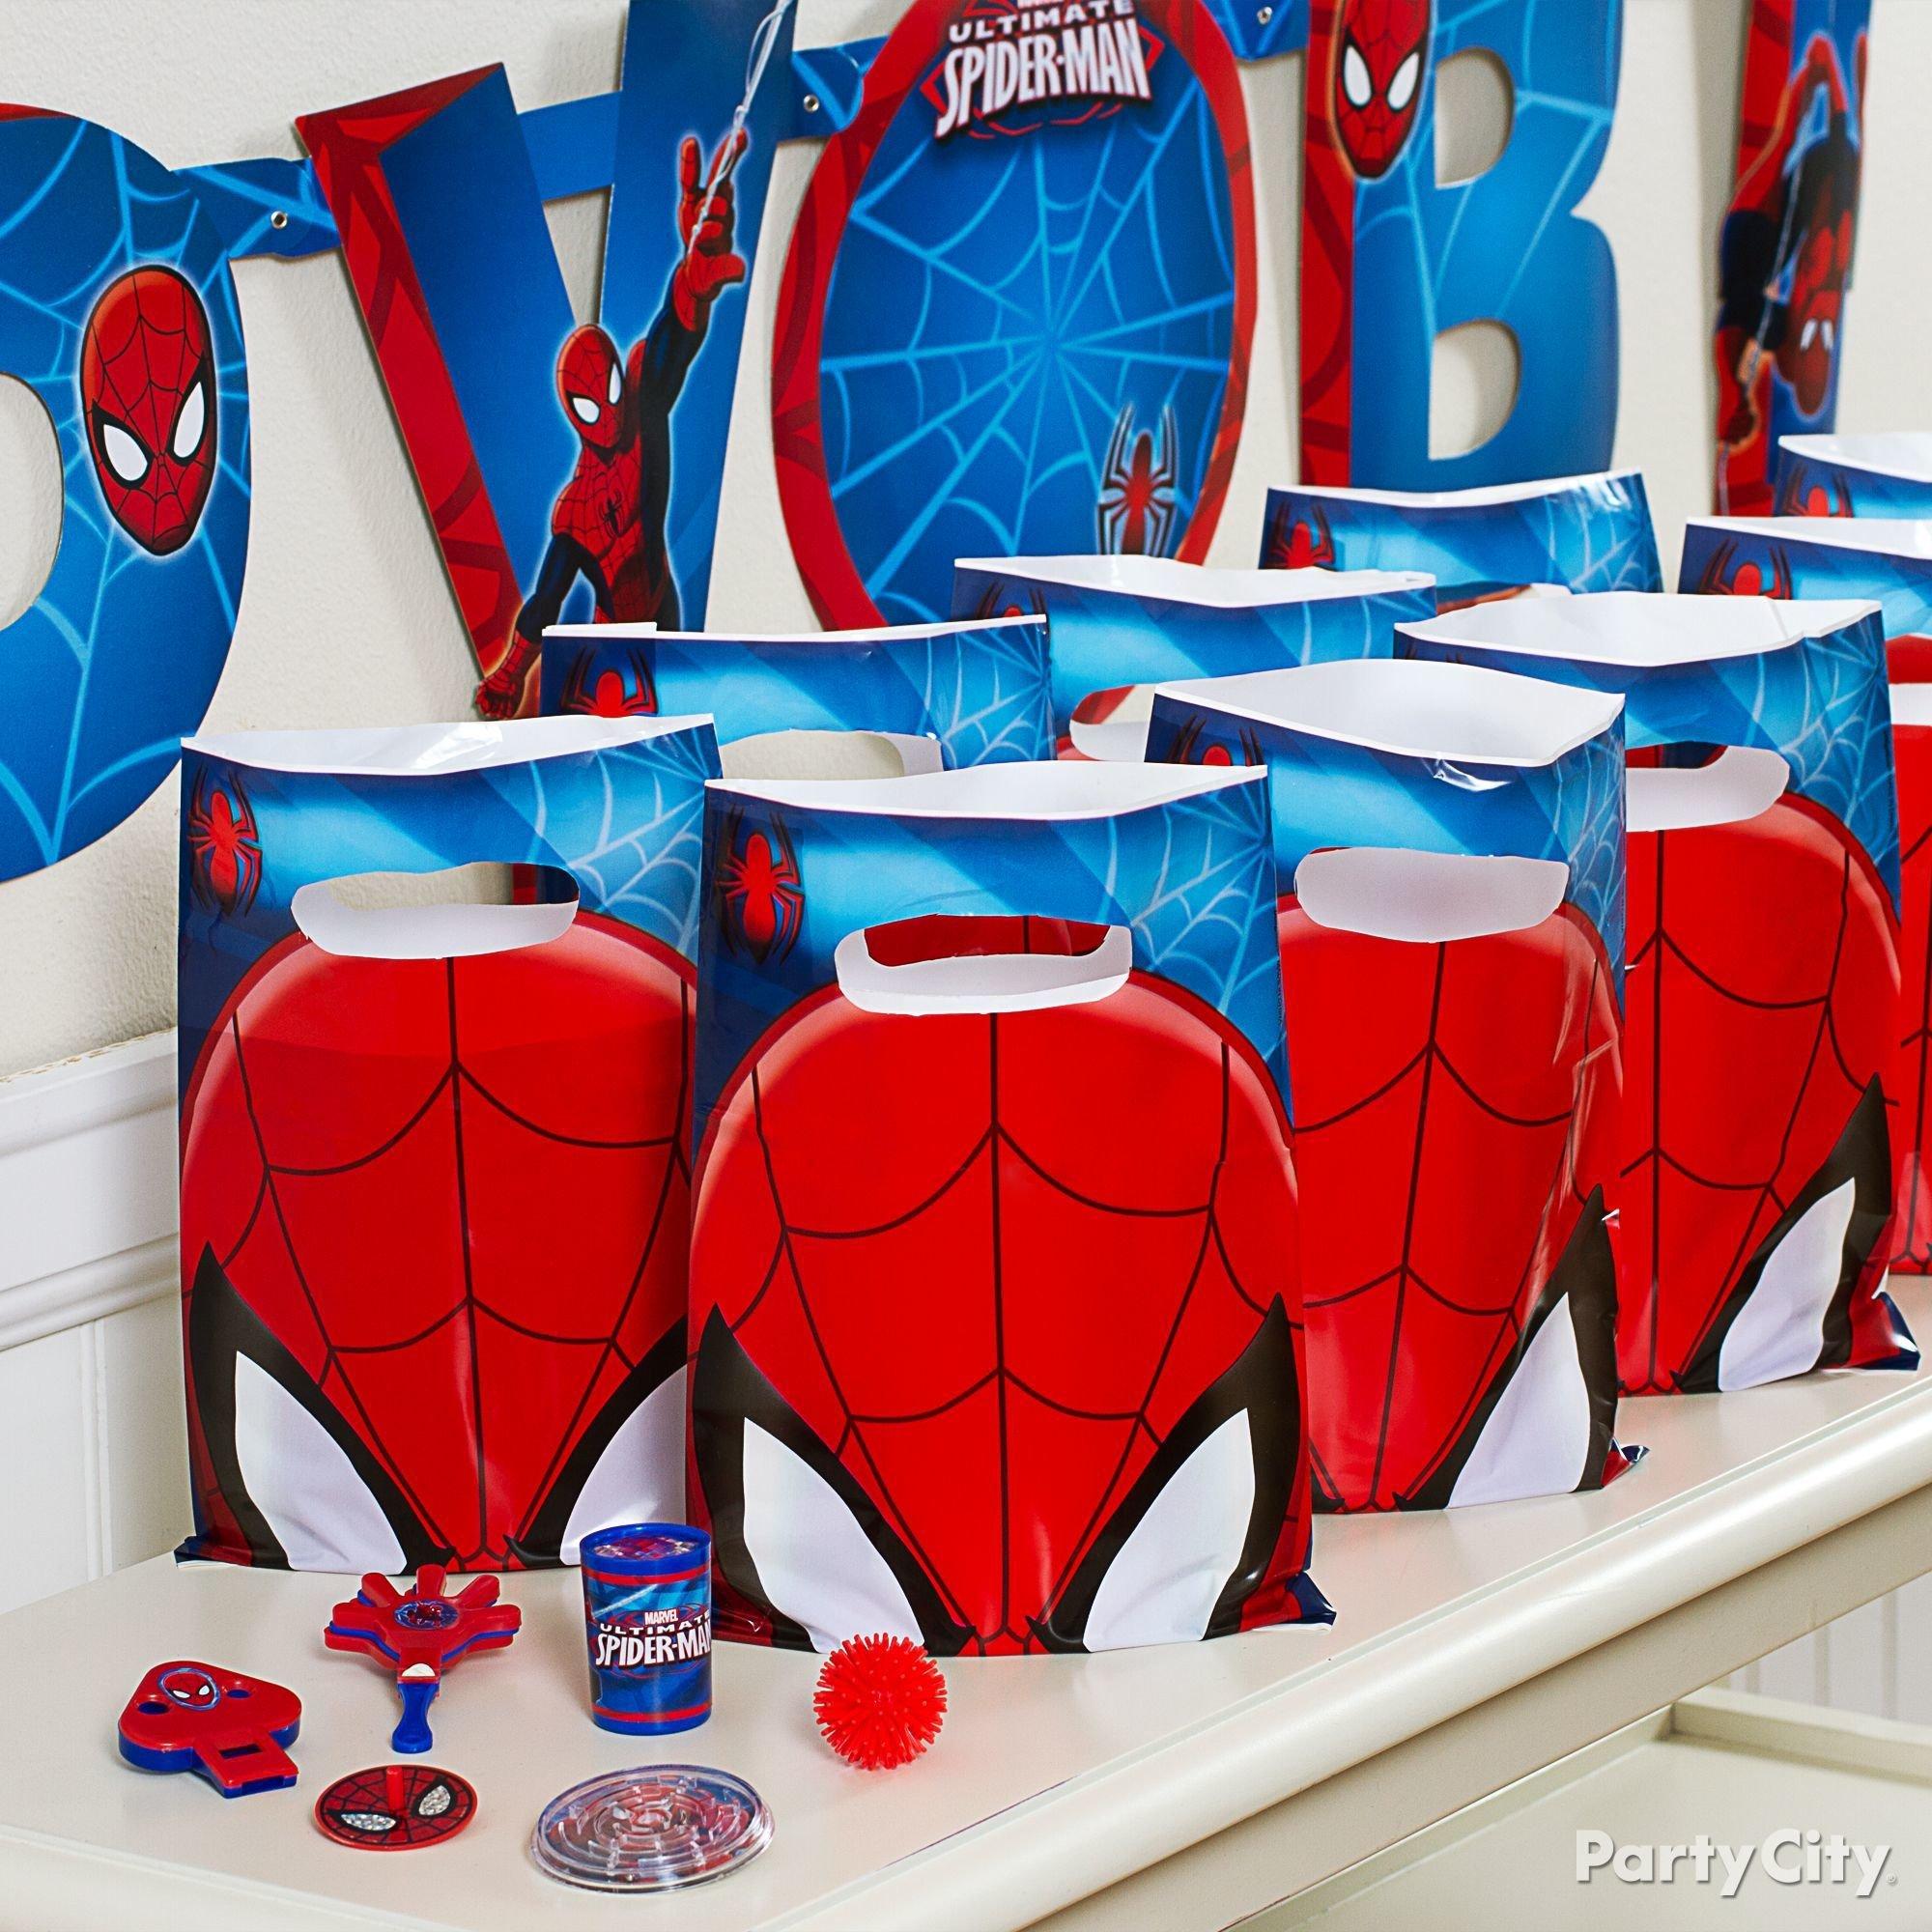 Original Spiderman Birthday Party theme hand made craft for kids